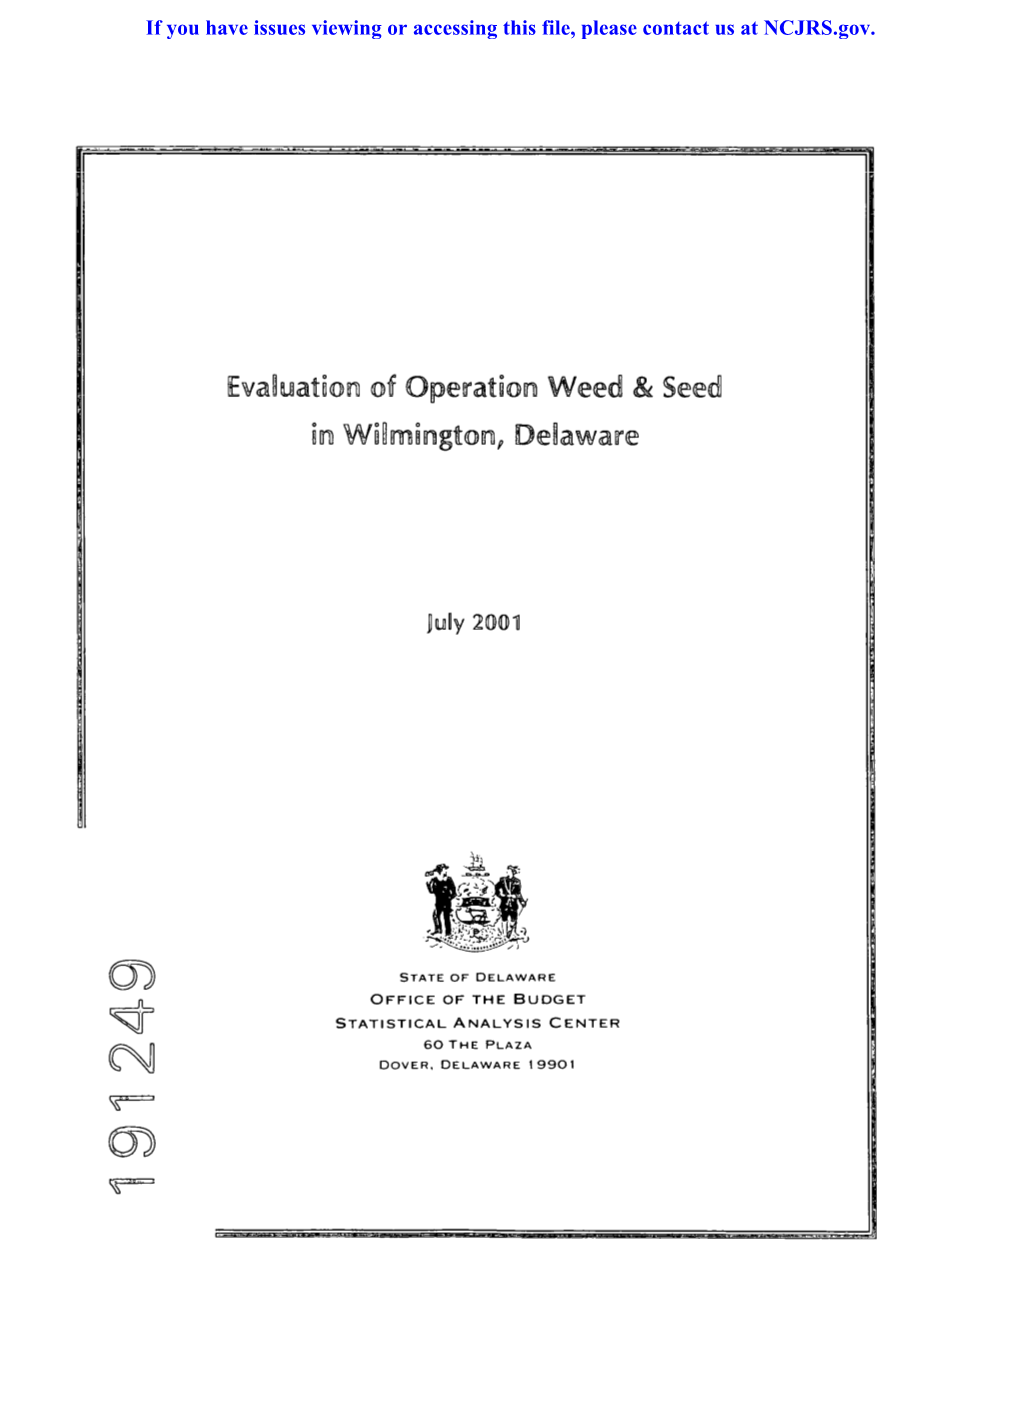 £Valuatio~ of Opecation Weed & Seed in Wilmington, Delaware